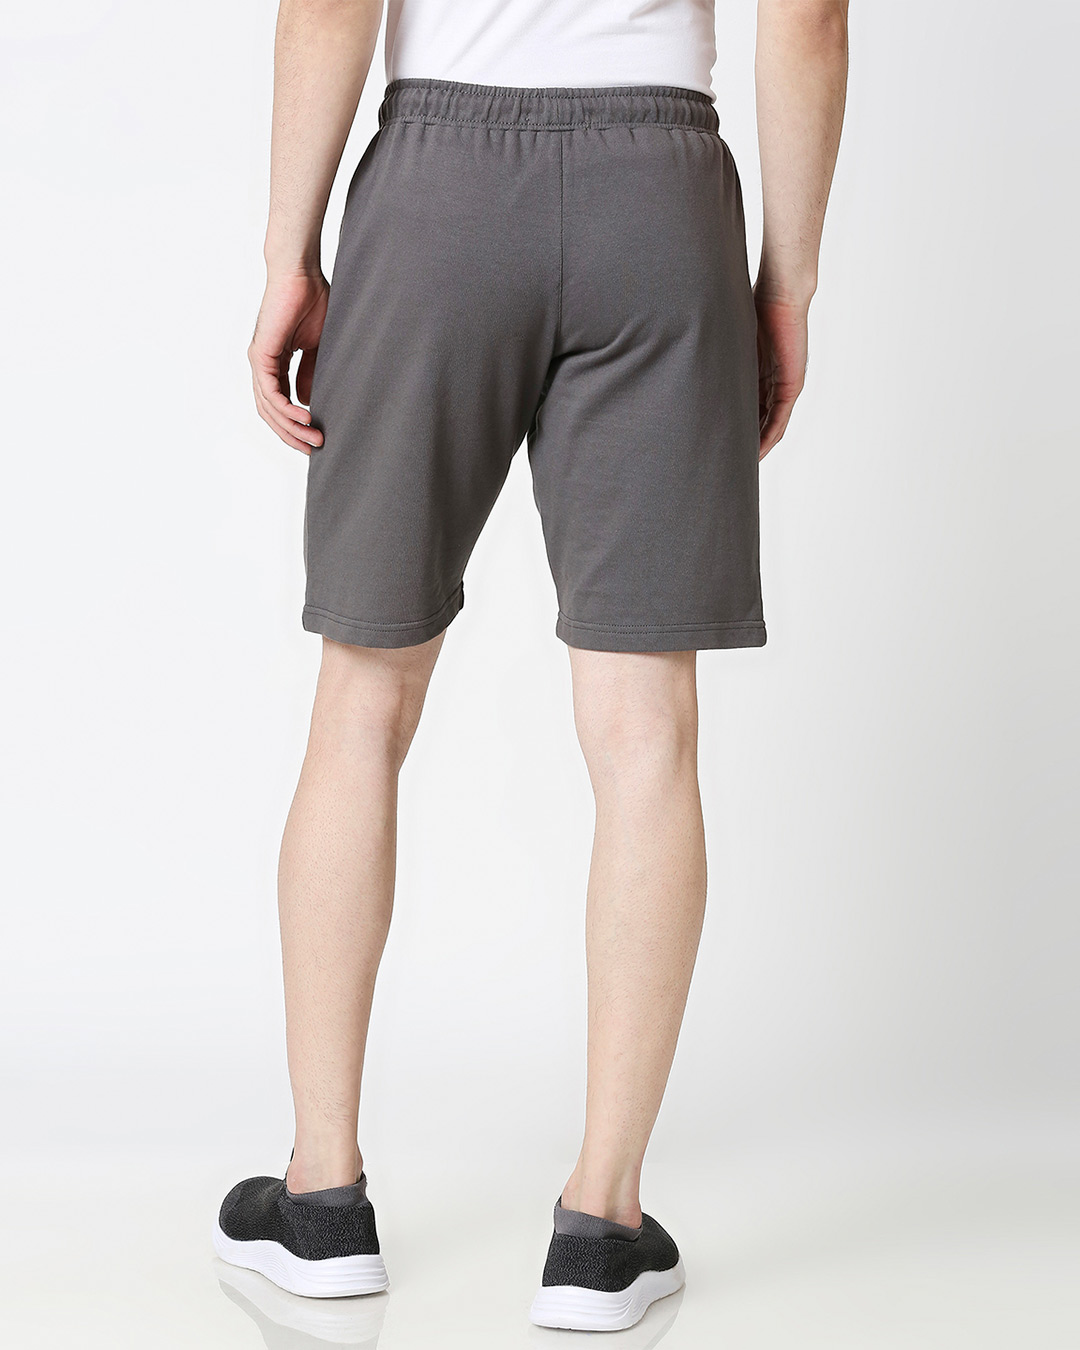 Shop Dirty Mind Men's Printed Shorts-Back